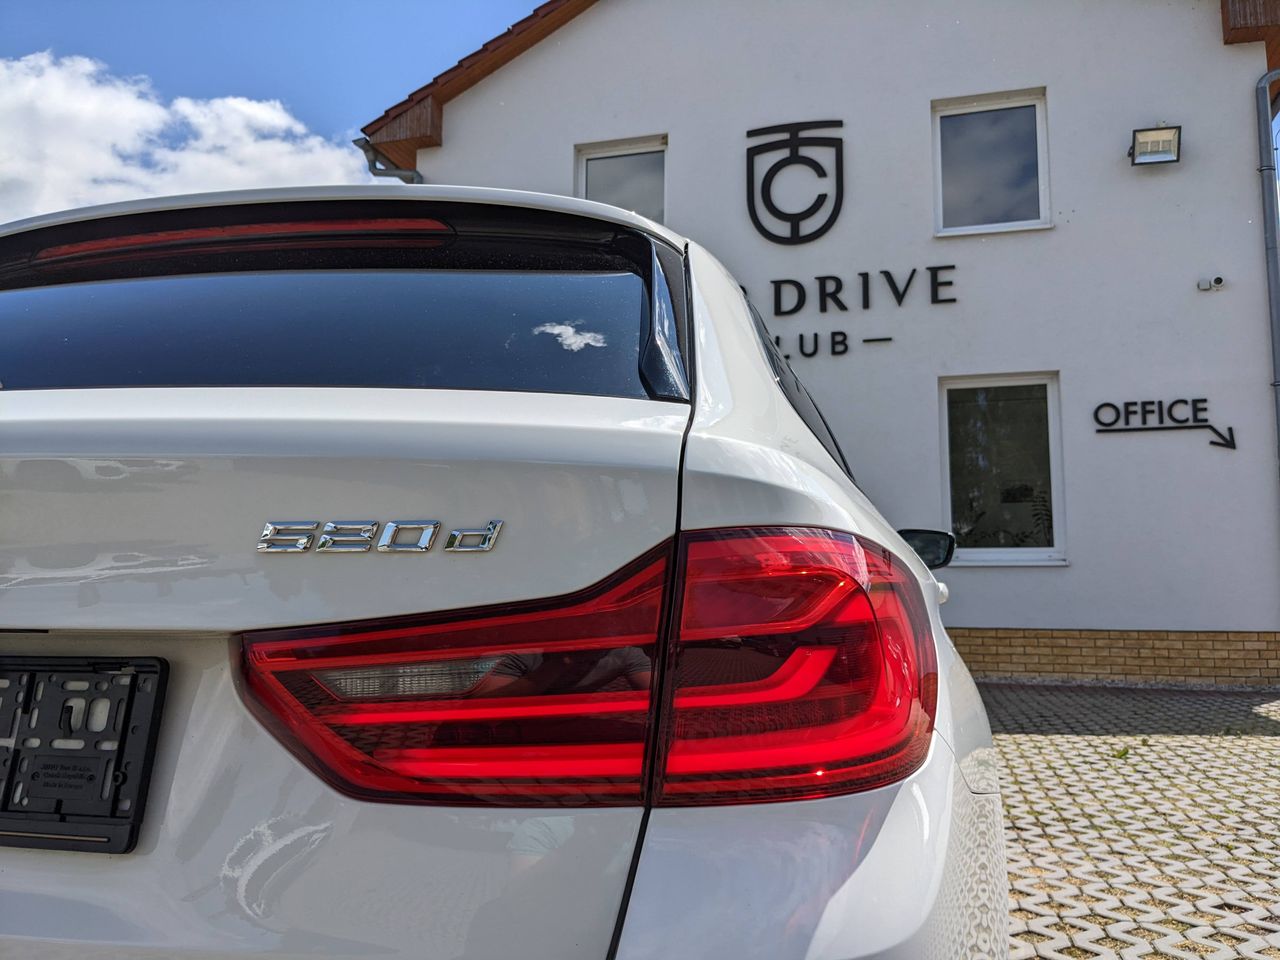 BMW 520d xDrive Touring Live Cockpit Driving Assistant Professional